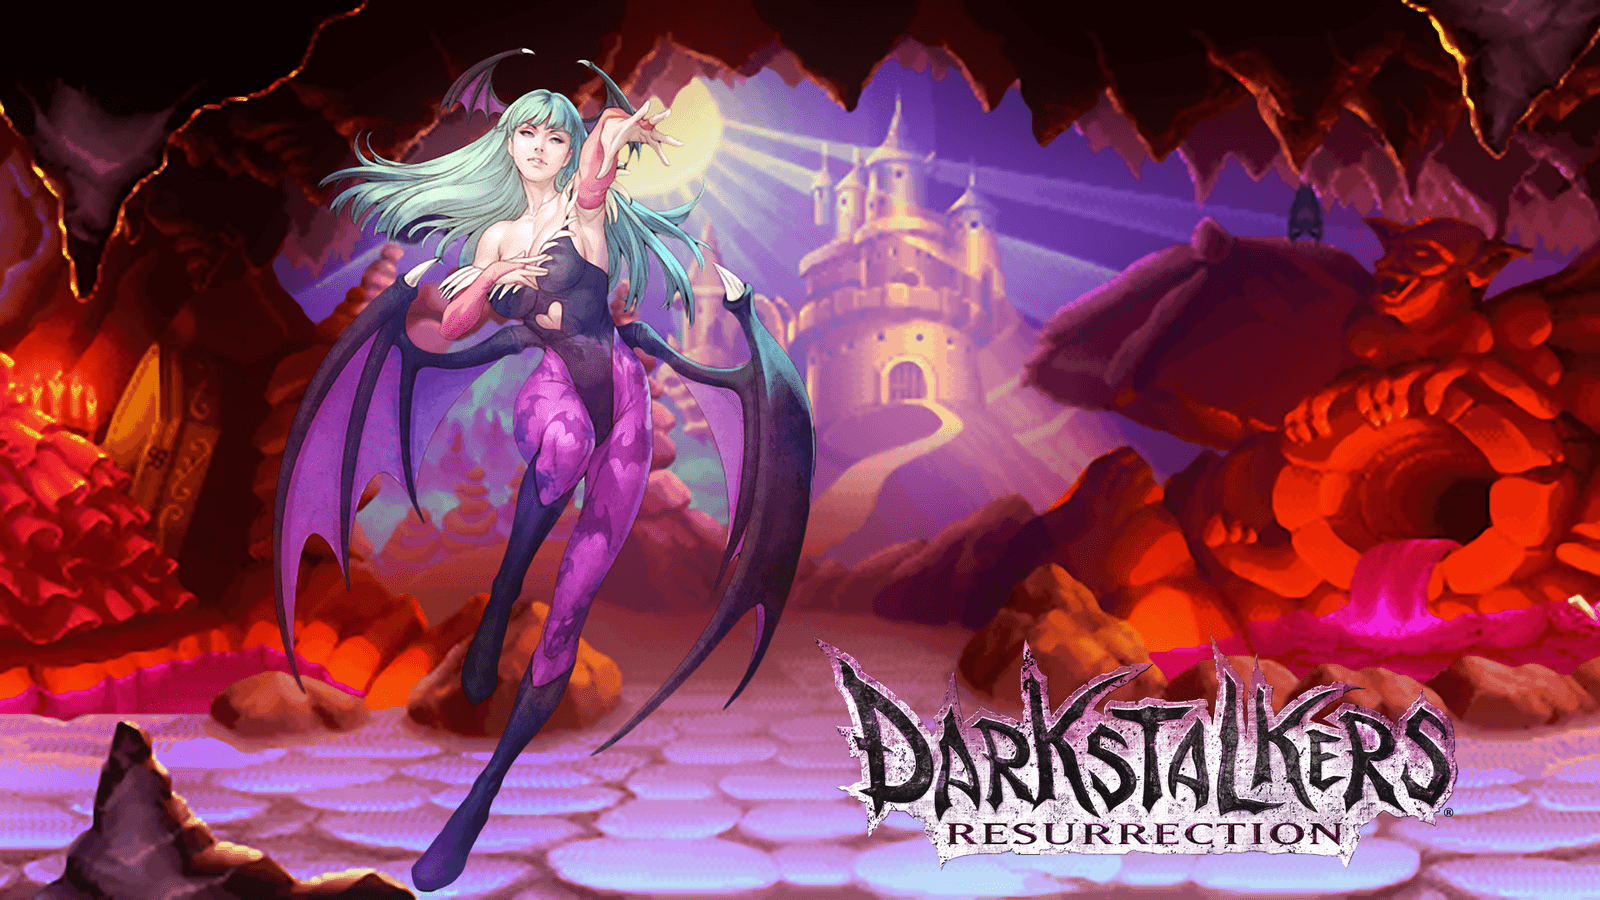 Darkstalkers Vampire Video Game Morrigan Aensland Wings Wallpaper